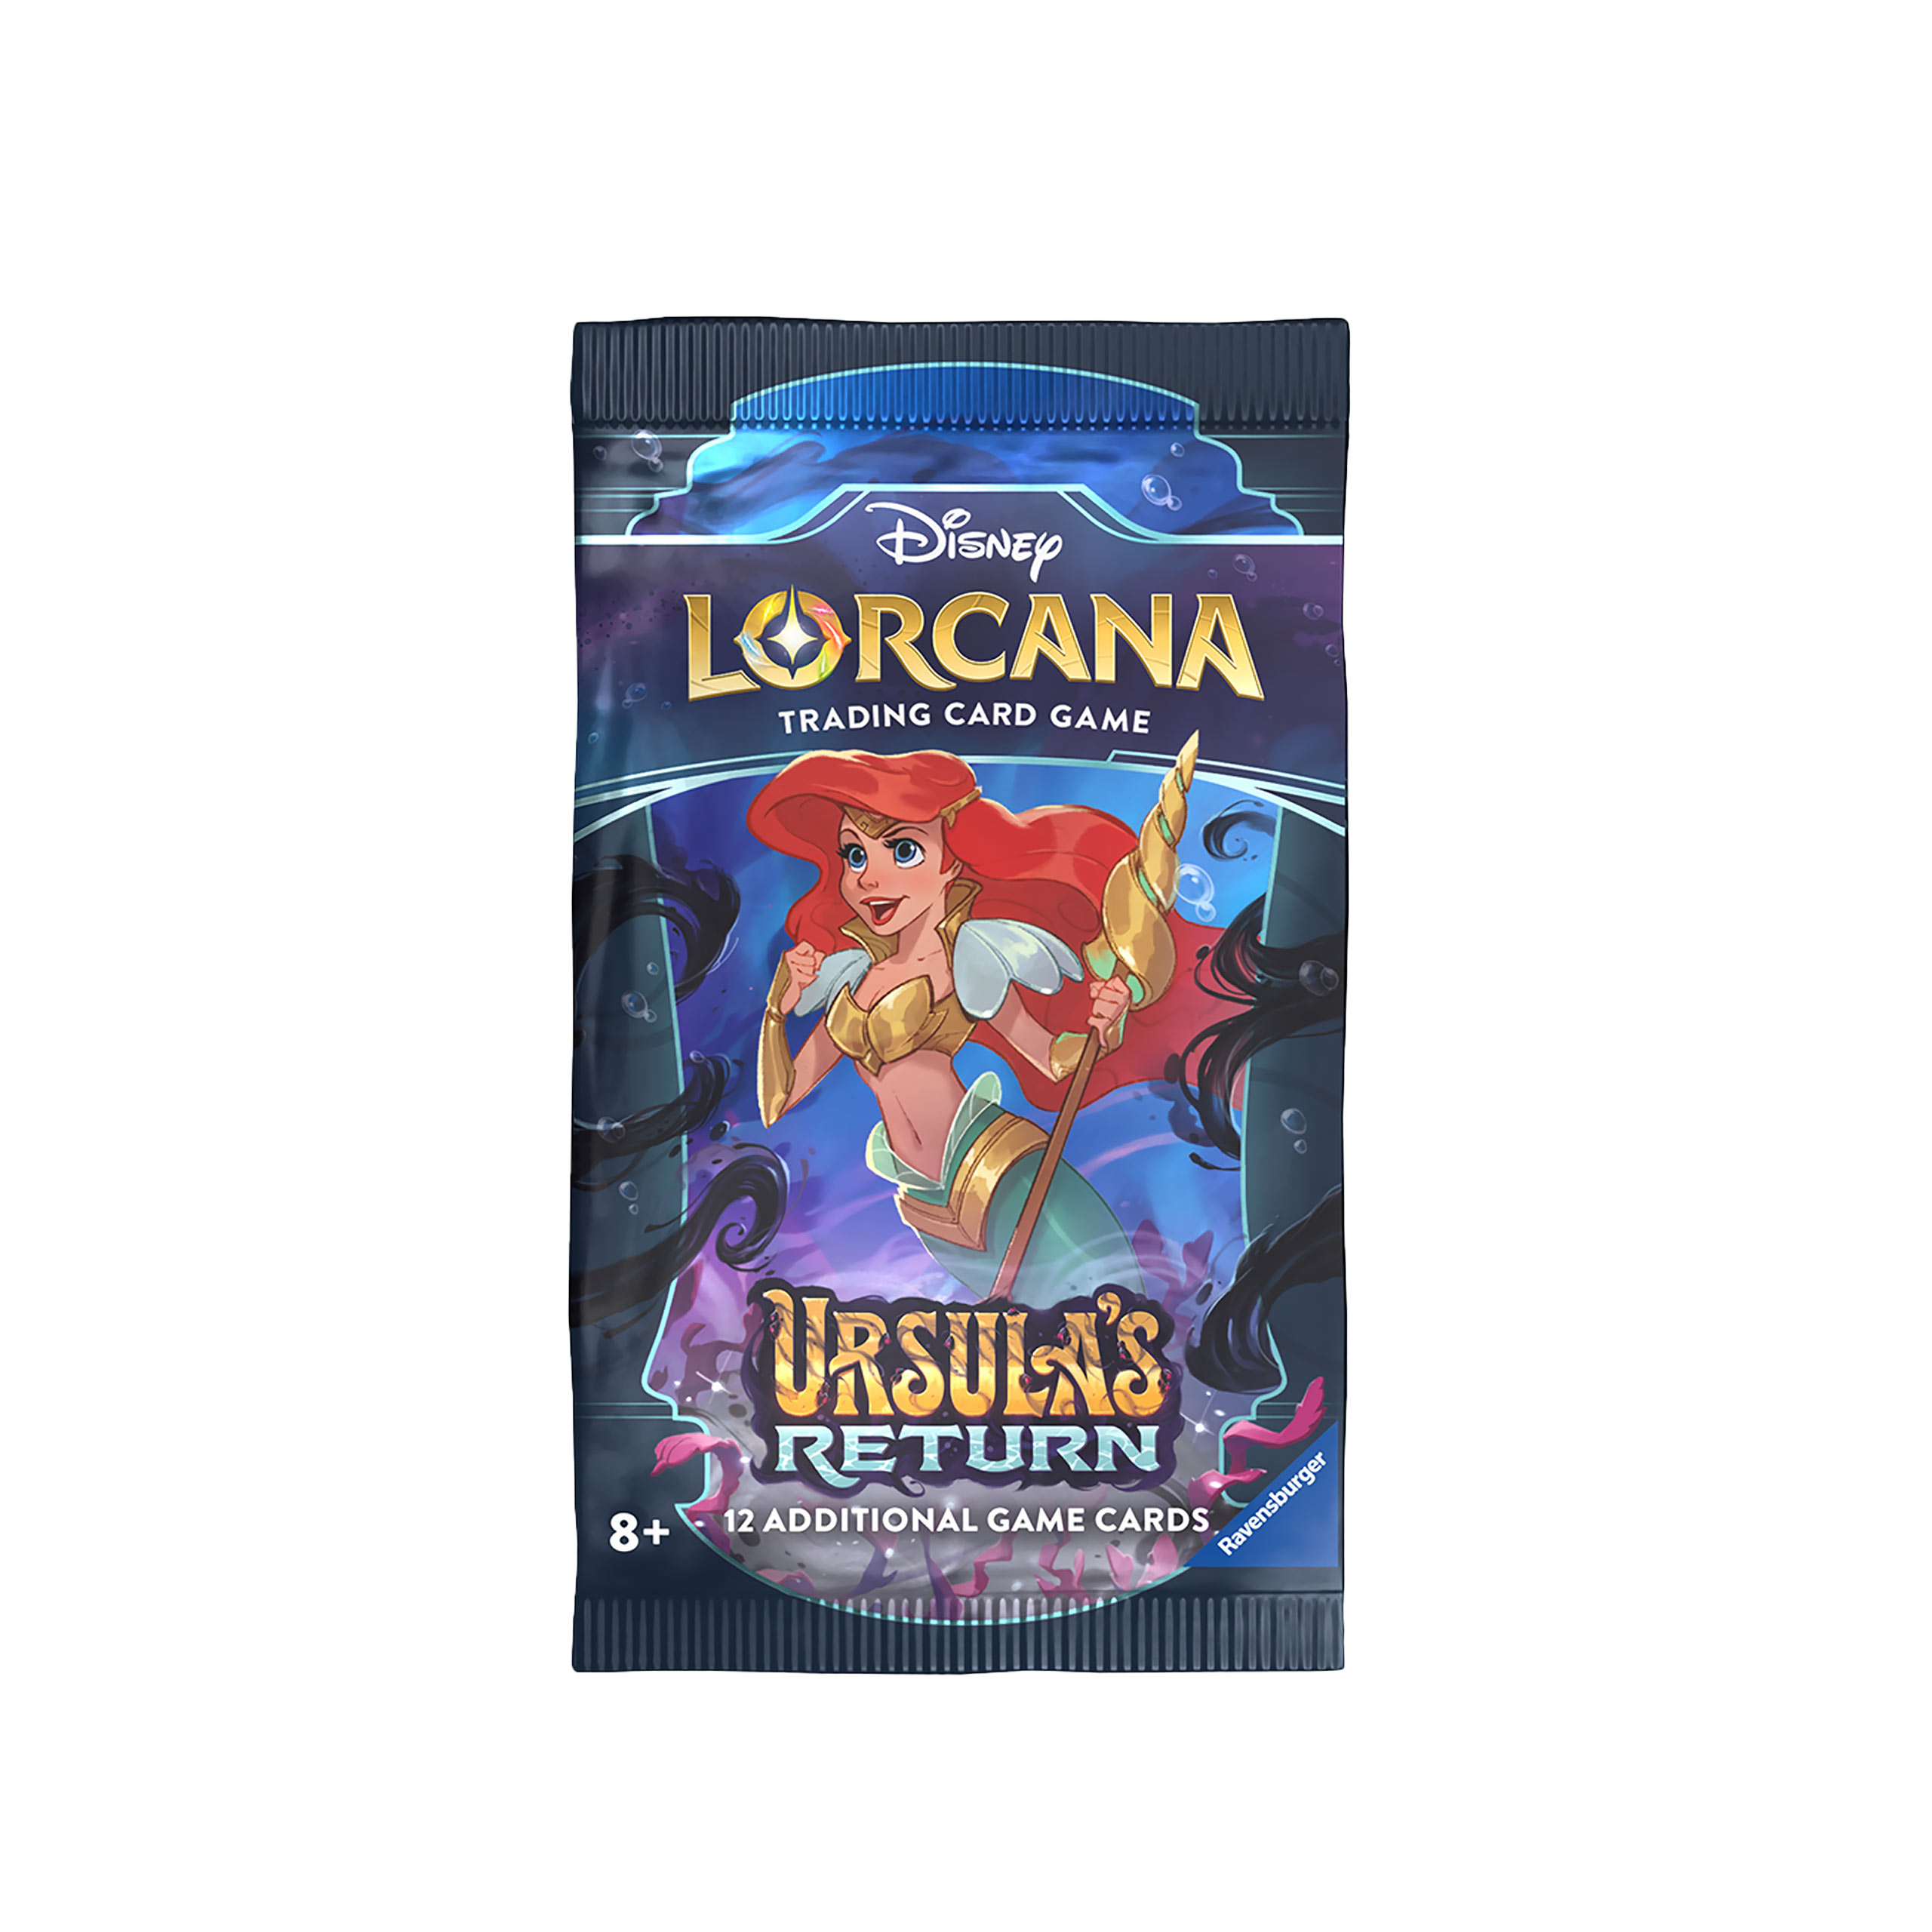 Disney Lorcana Booster - Ursulas Return Trading Card Game